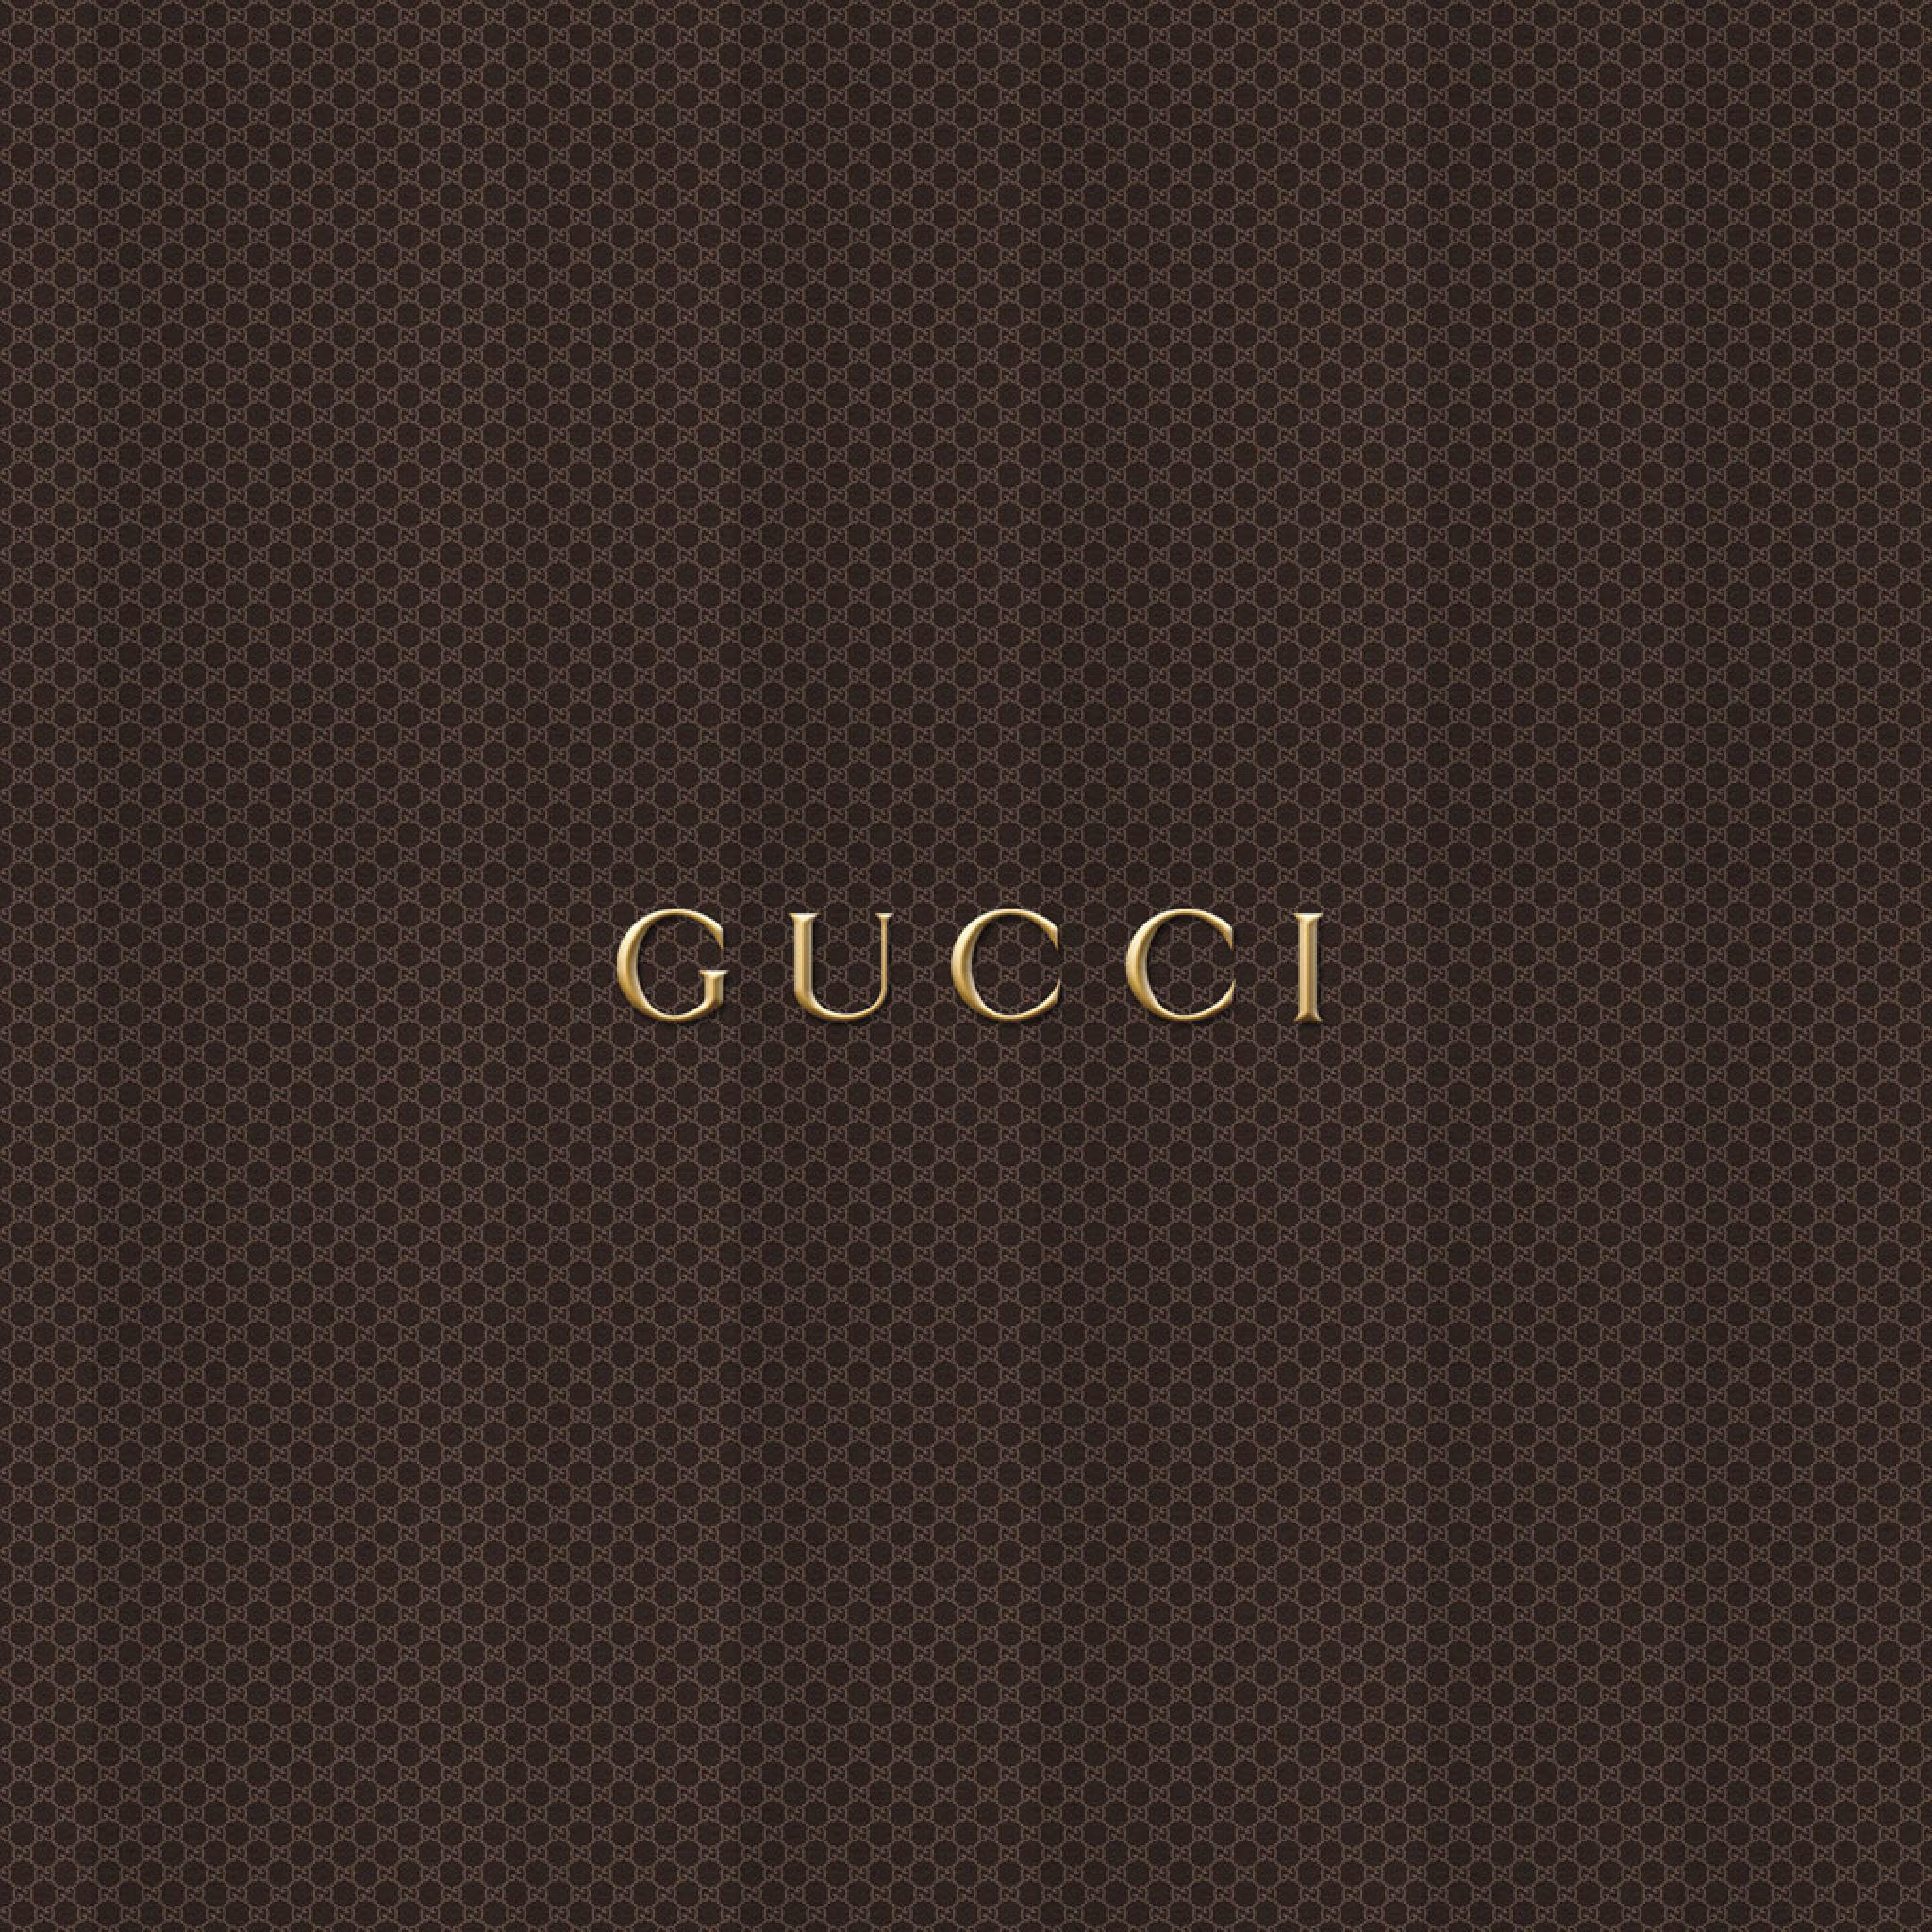 Gucci Print Wallpapers